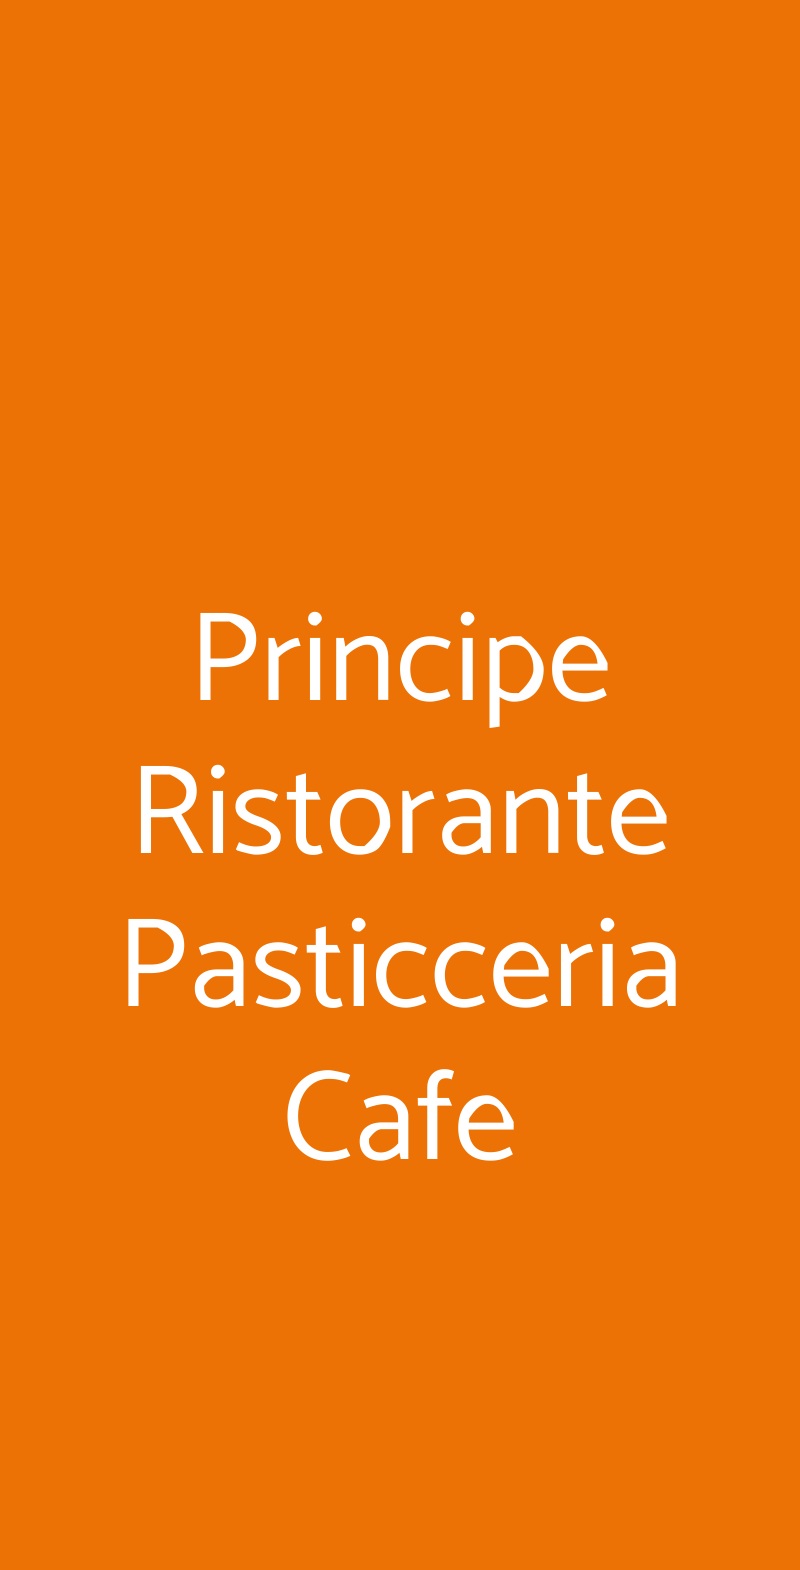 Principe Ristorante Pasticceria Cafe Torino menù 1 pagina